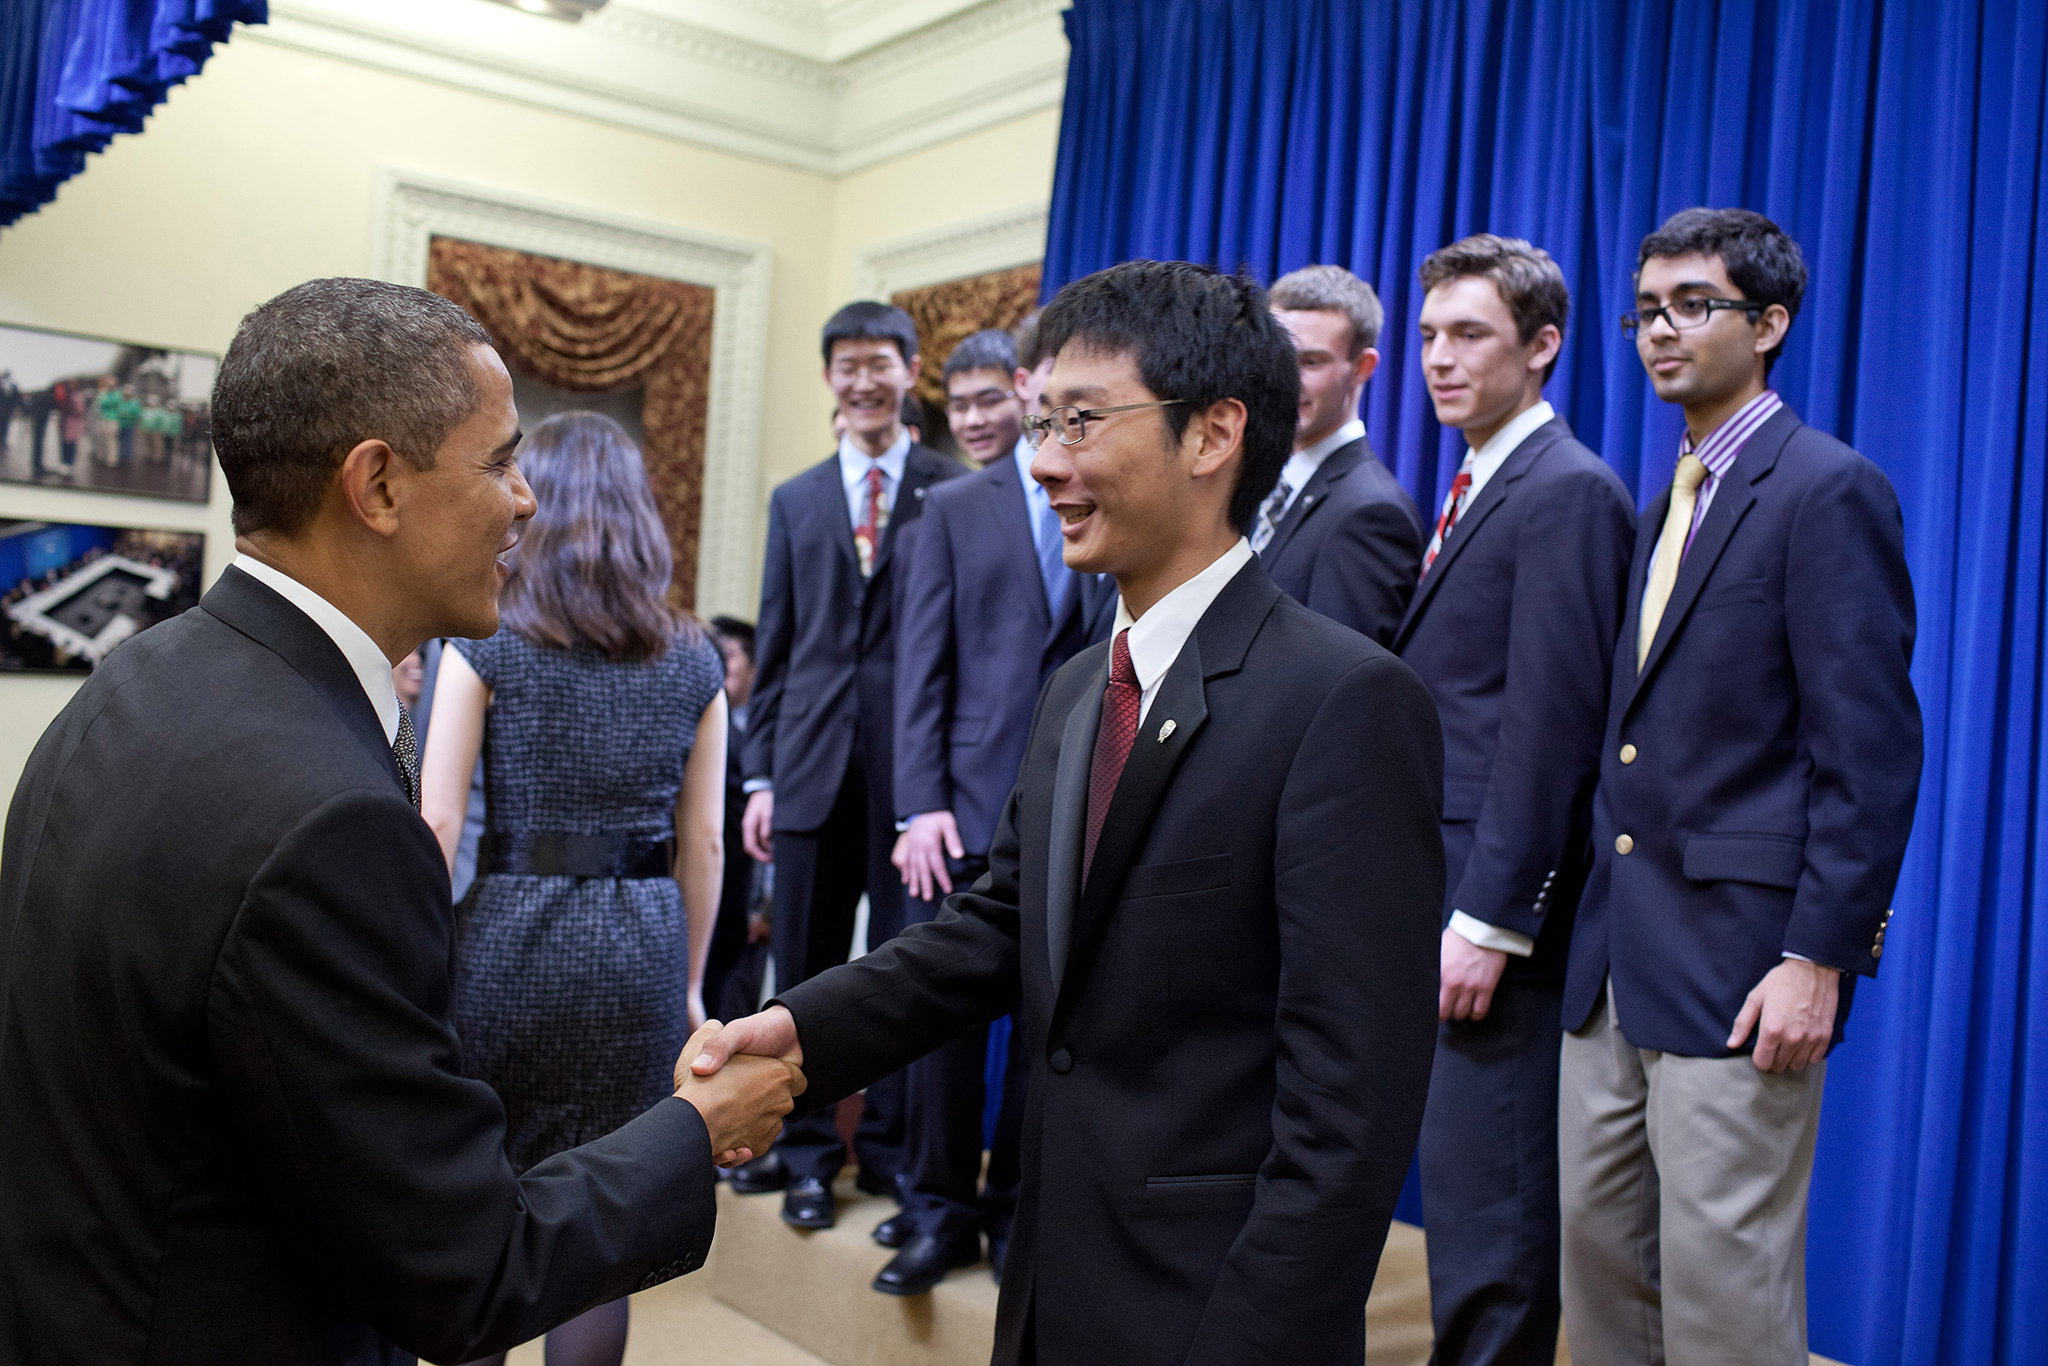 President Obama greets STS finalist Jiacheng (Ben) Li at the White House